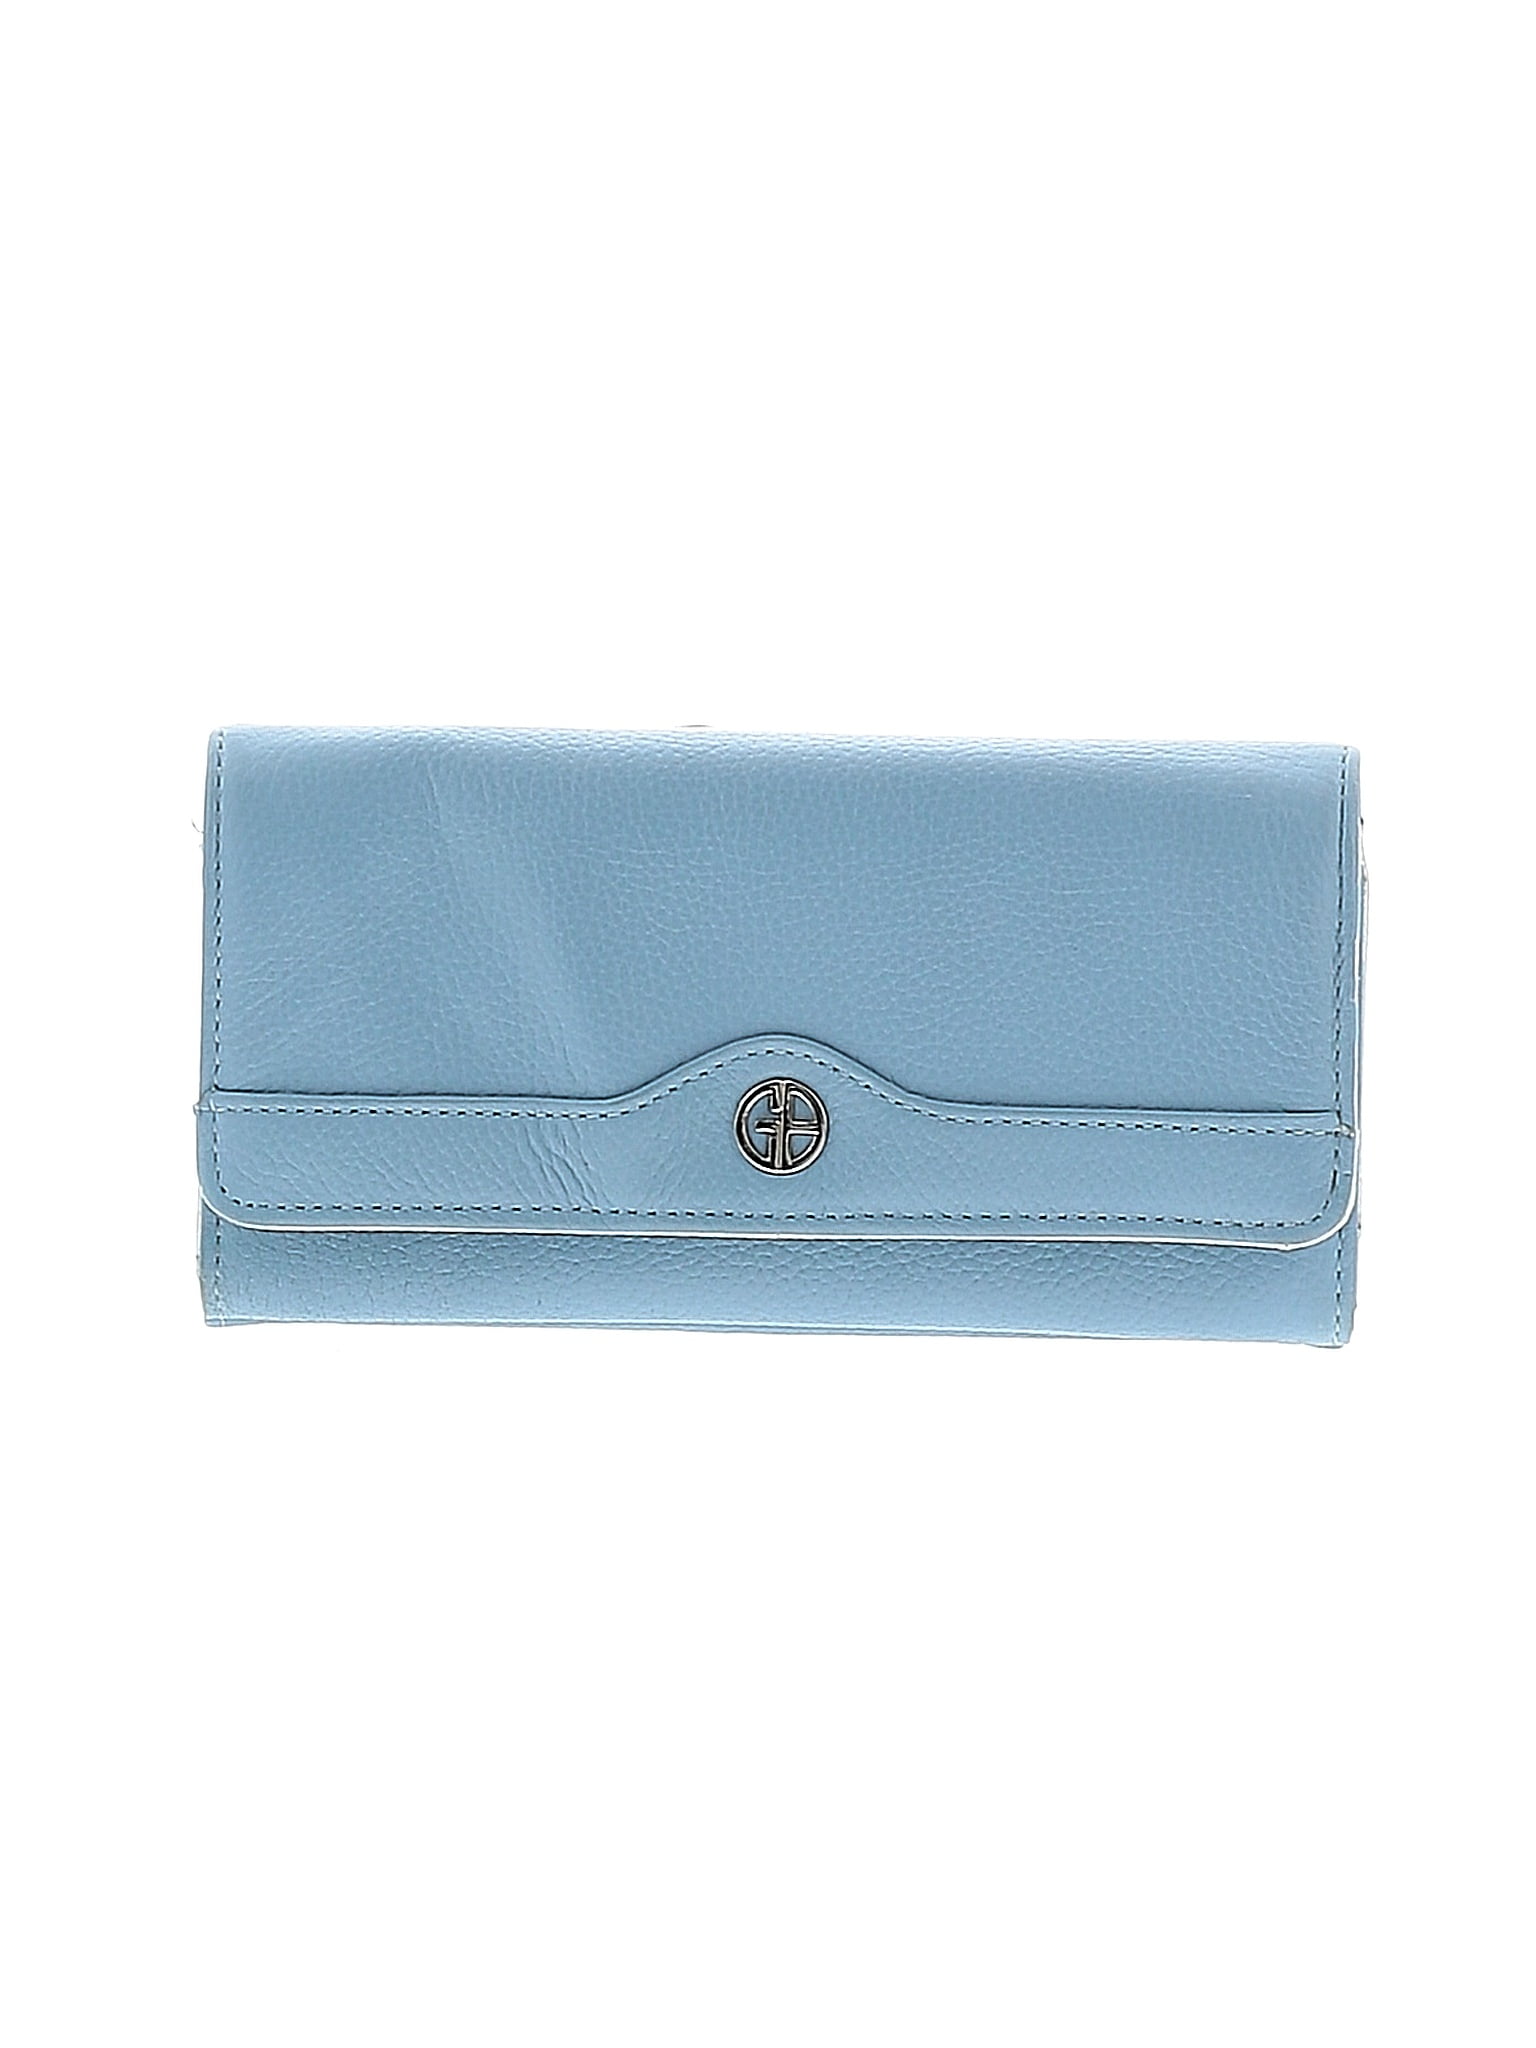 LOWEST NIB Giani Bernini wallet  Wallet, Giani bernini, Genuine leather